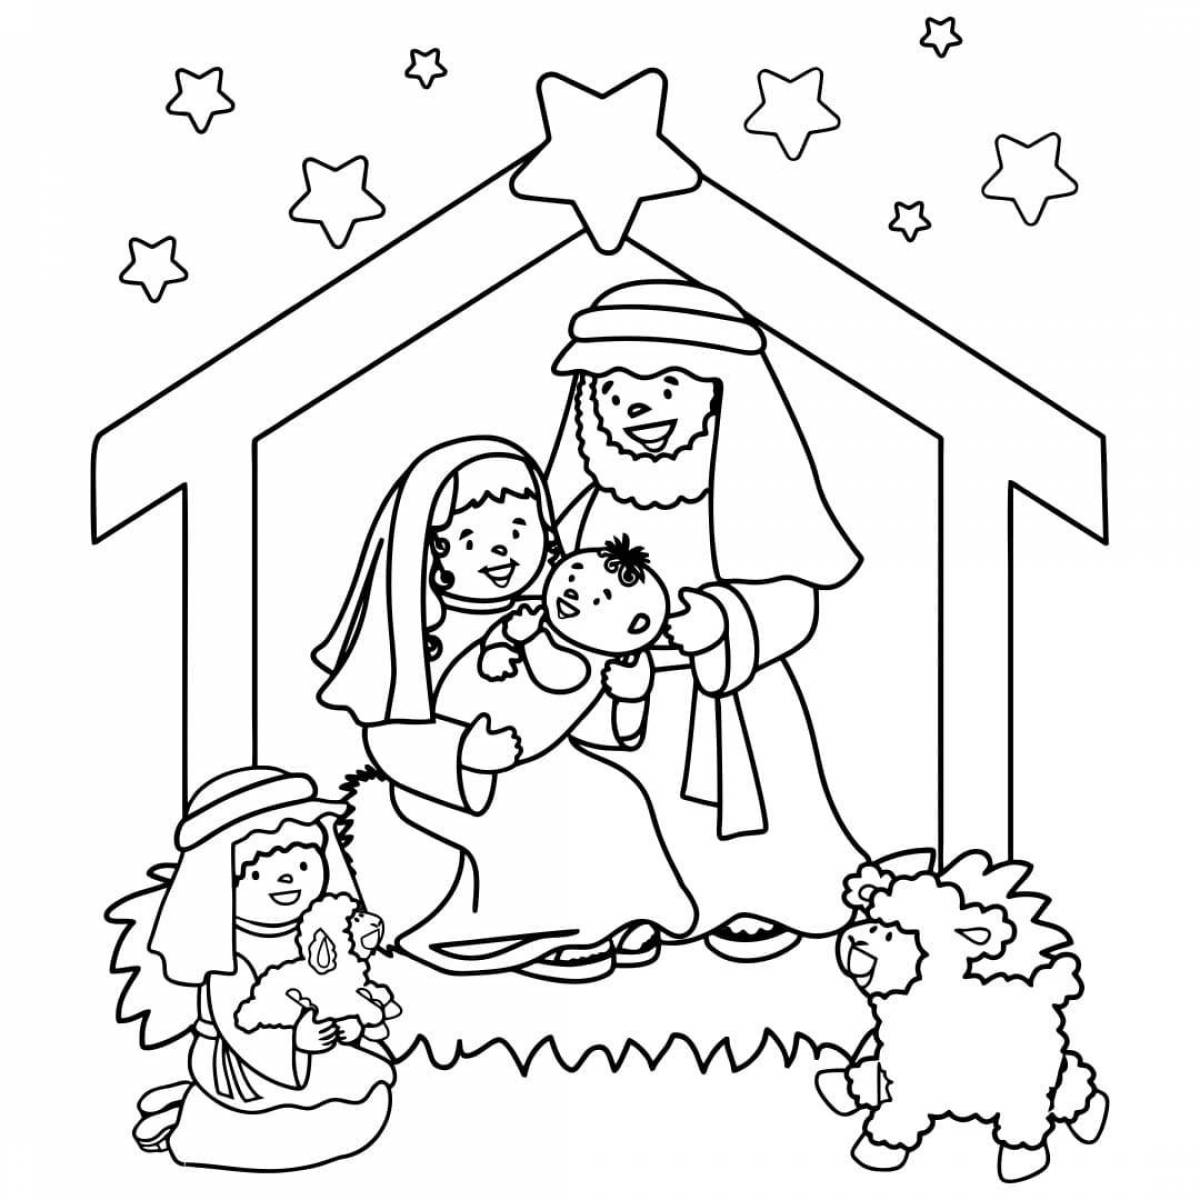 Great nativity scene coloring book